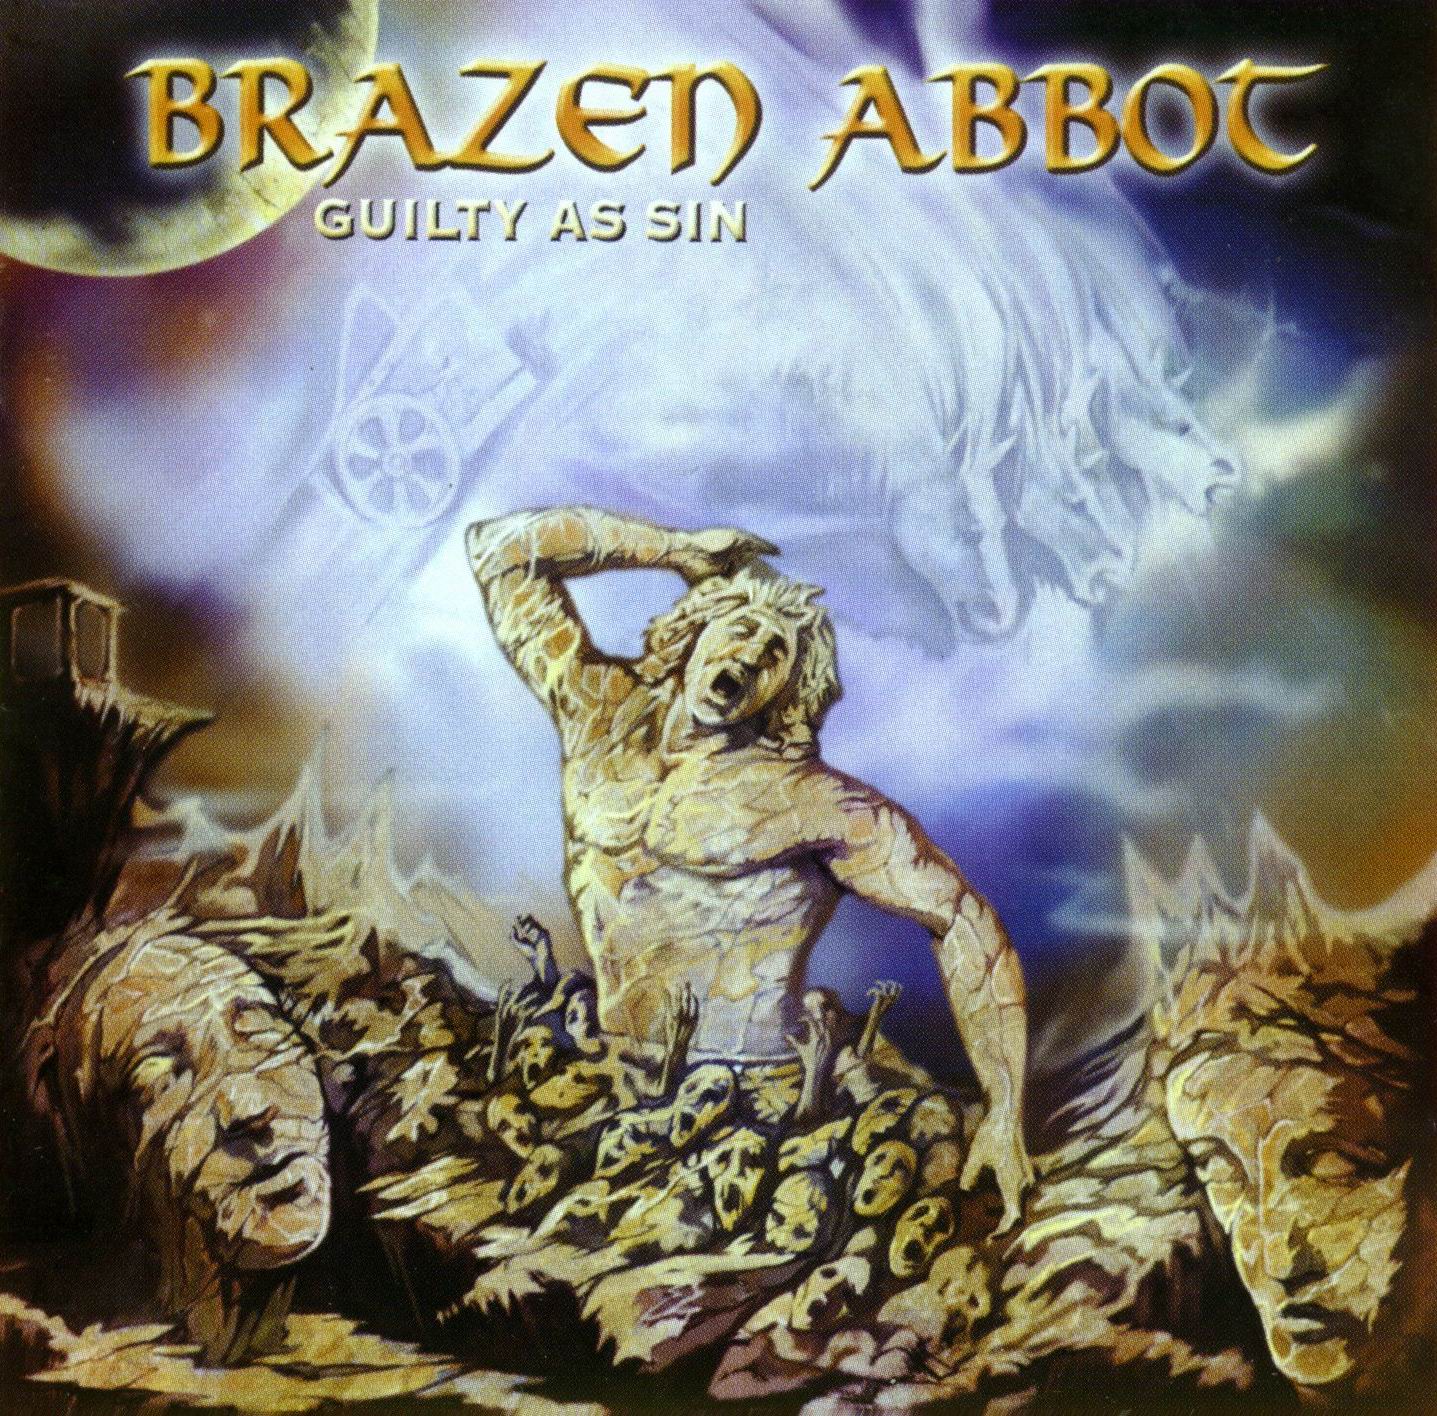 Brazen Abbot - Guilty as Sin